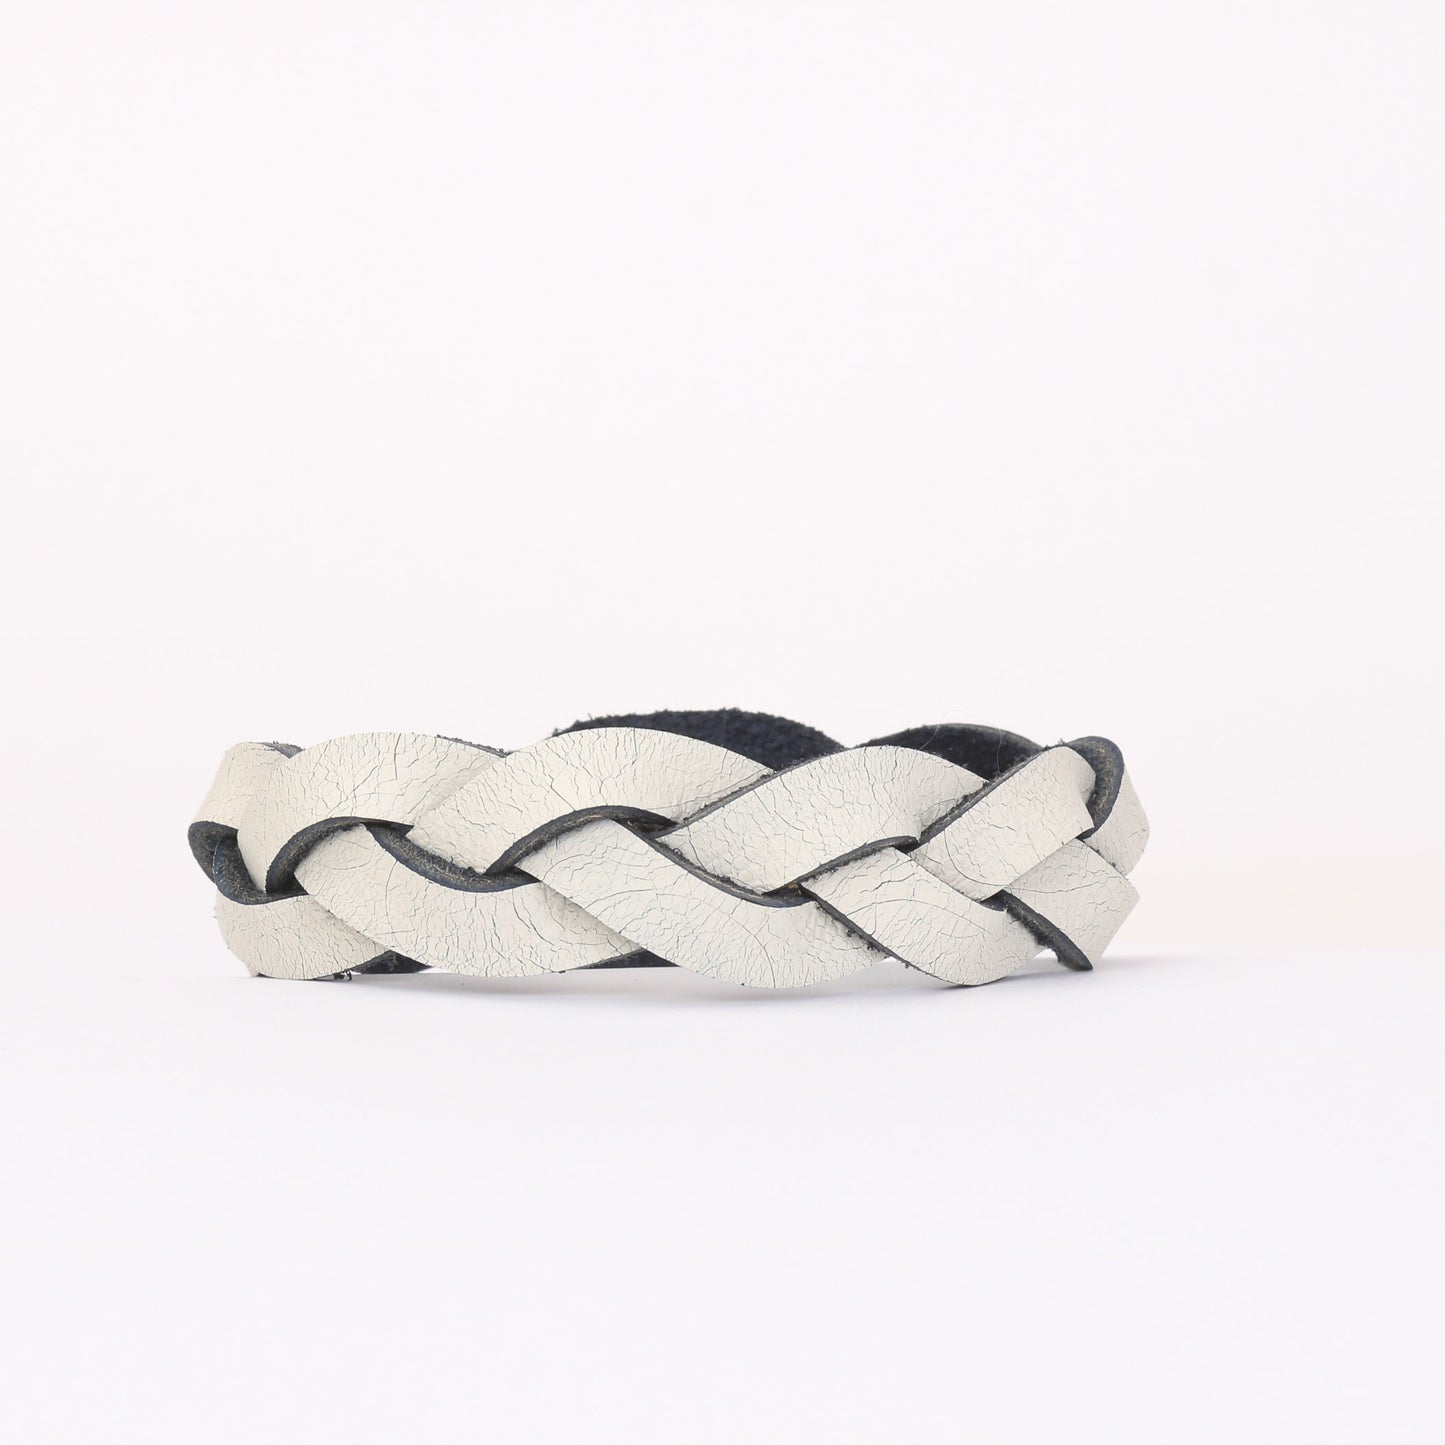 Infinite braid bracelets